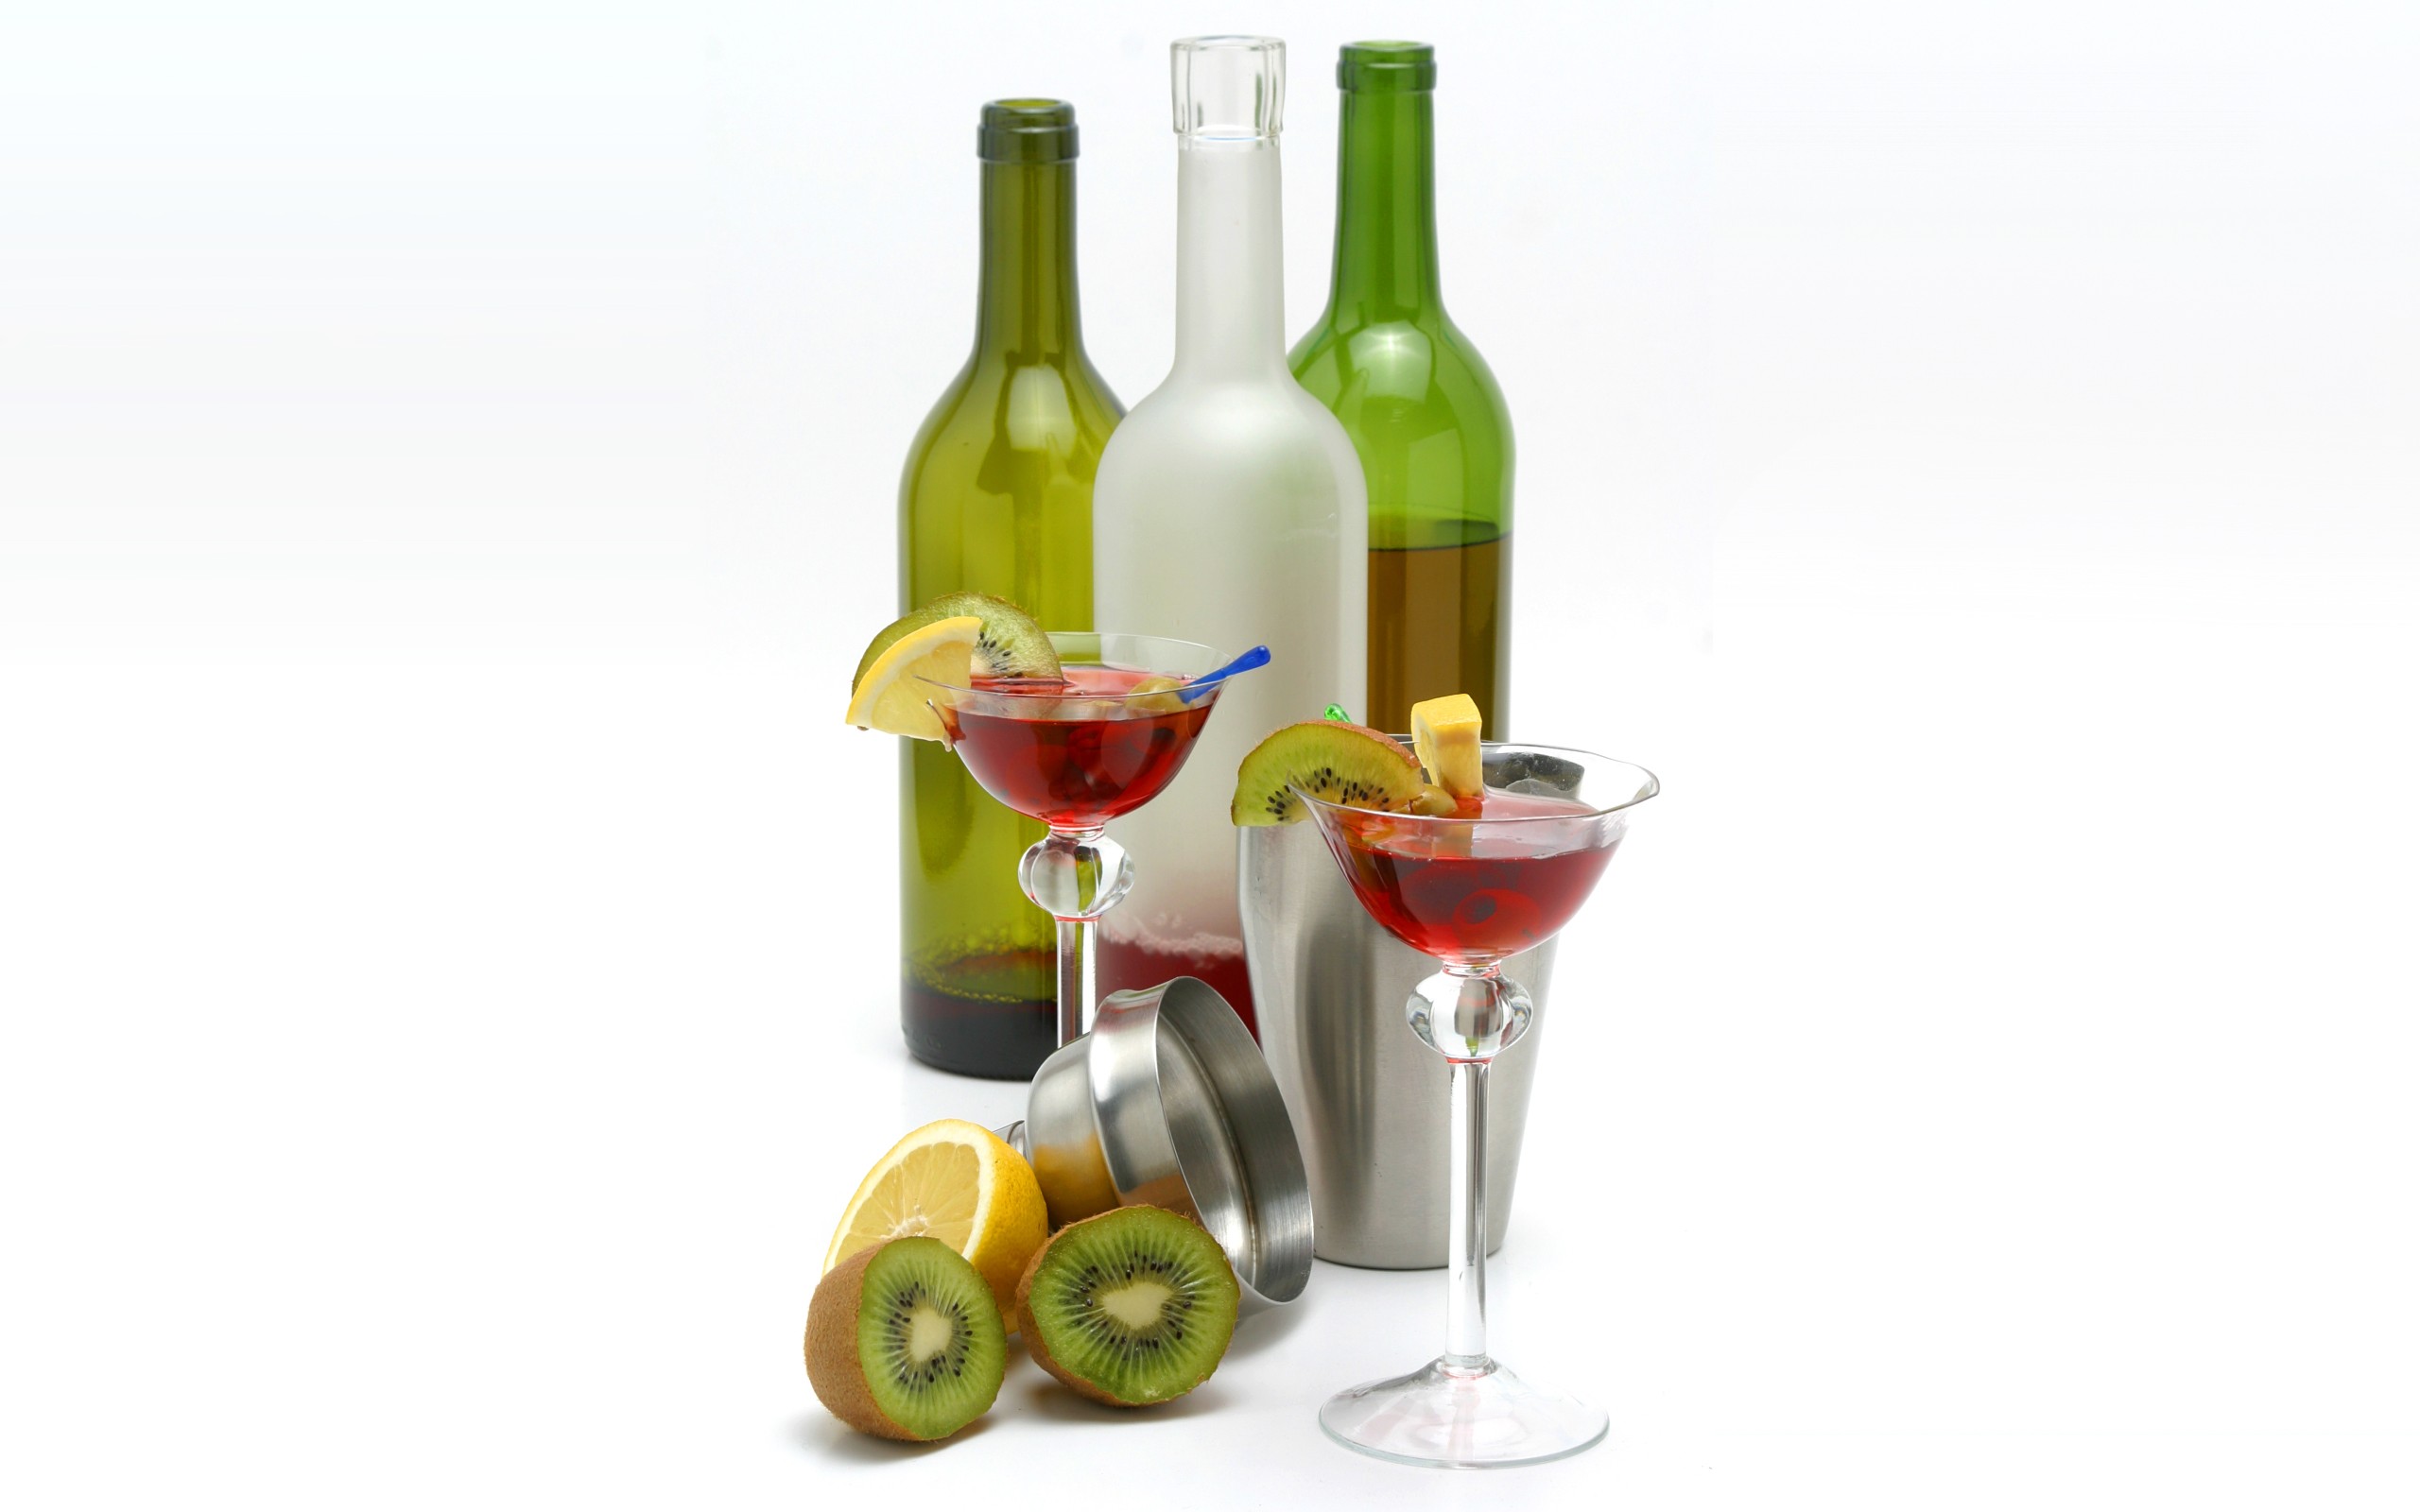 General 2560x1600 drink cocktails drinking glass kiwi (fruit) bottles simple background